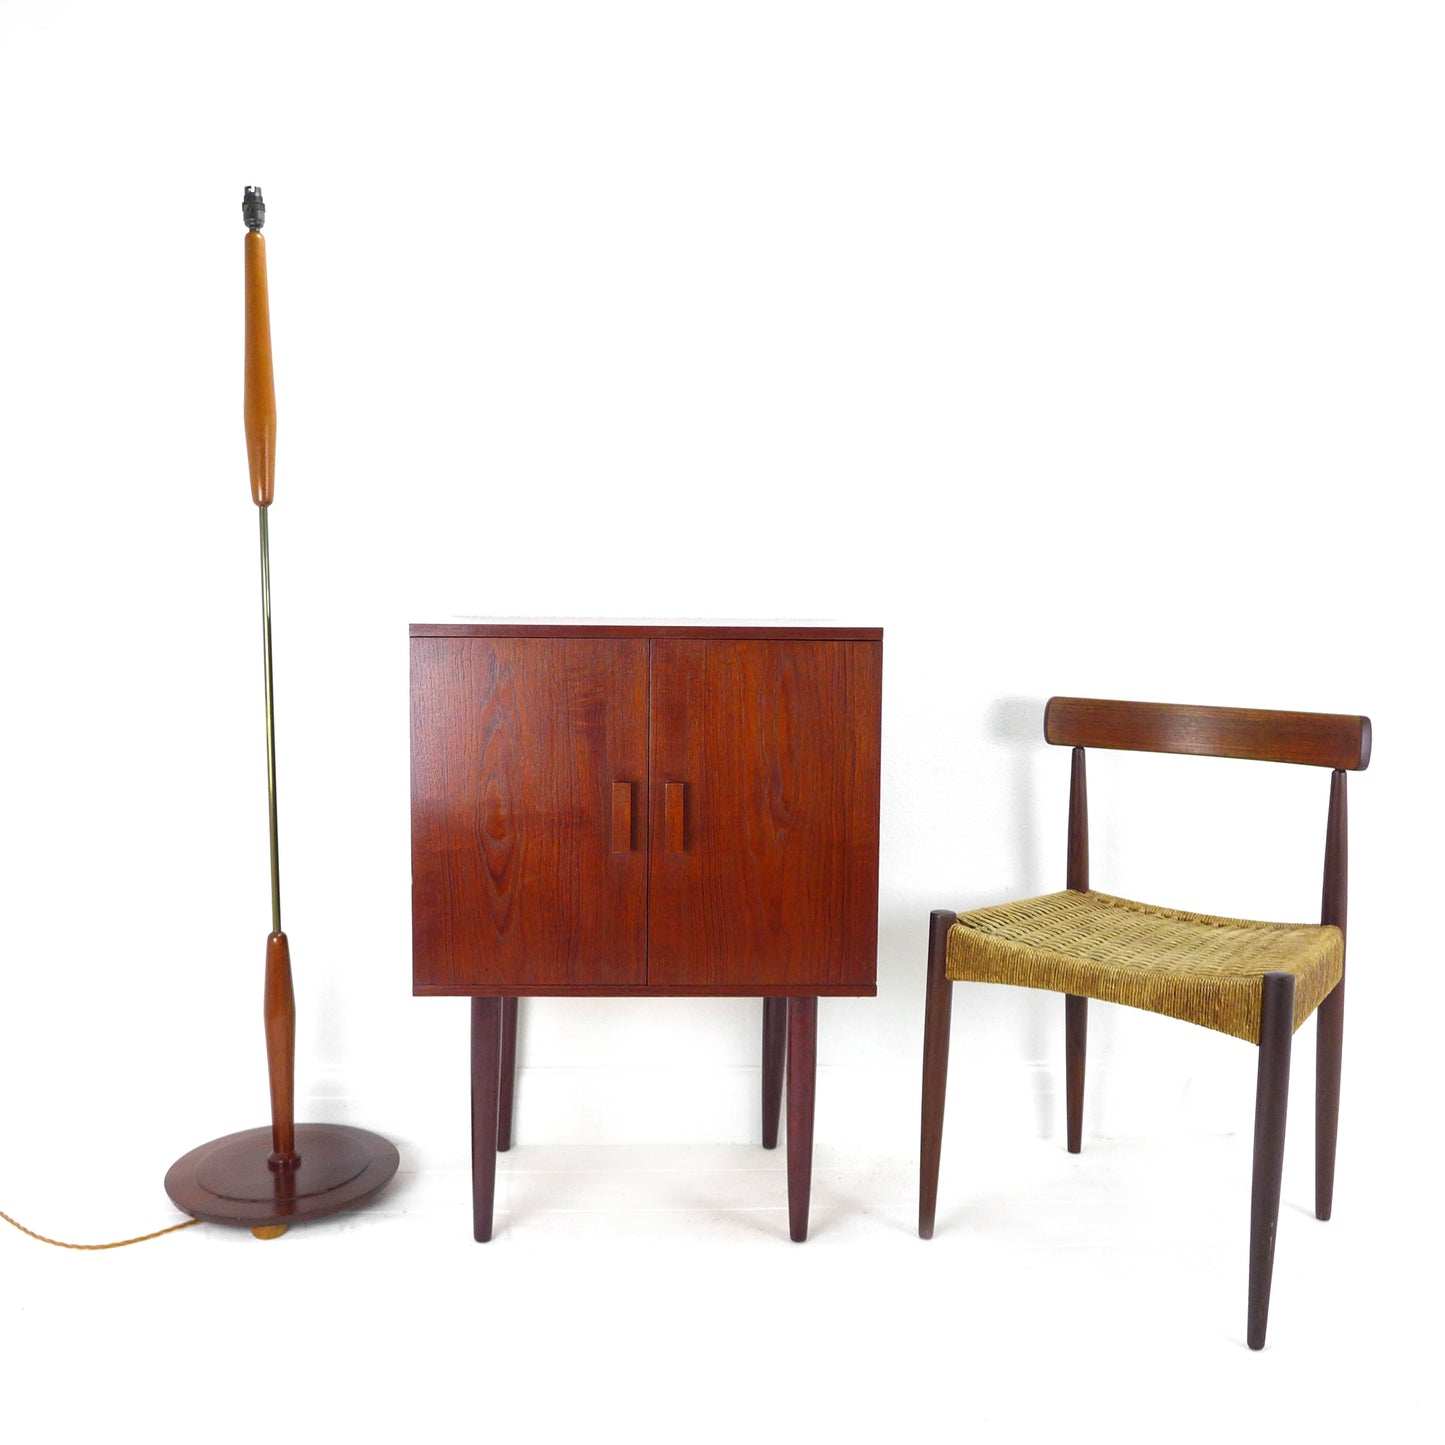 Danish Modern Teak & Brass Floor Lamp / Standard Lamp Base - Vintage/Mid Century